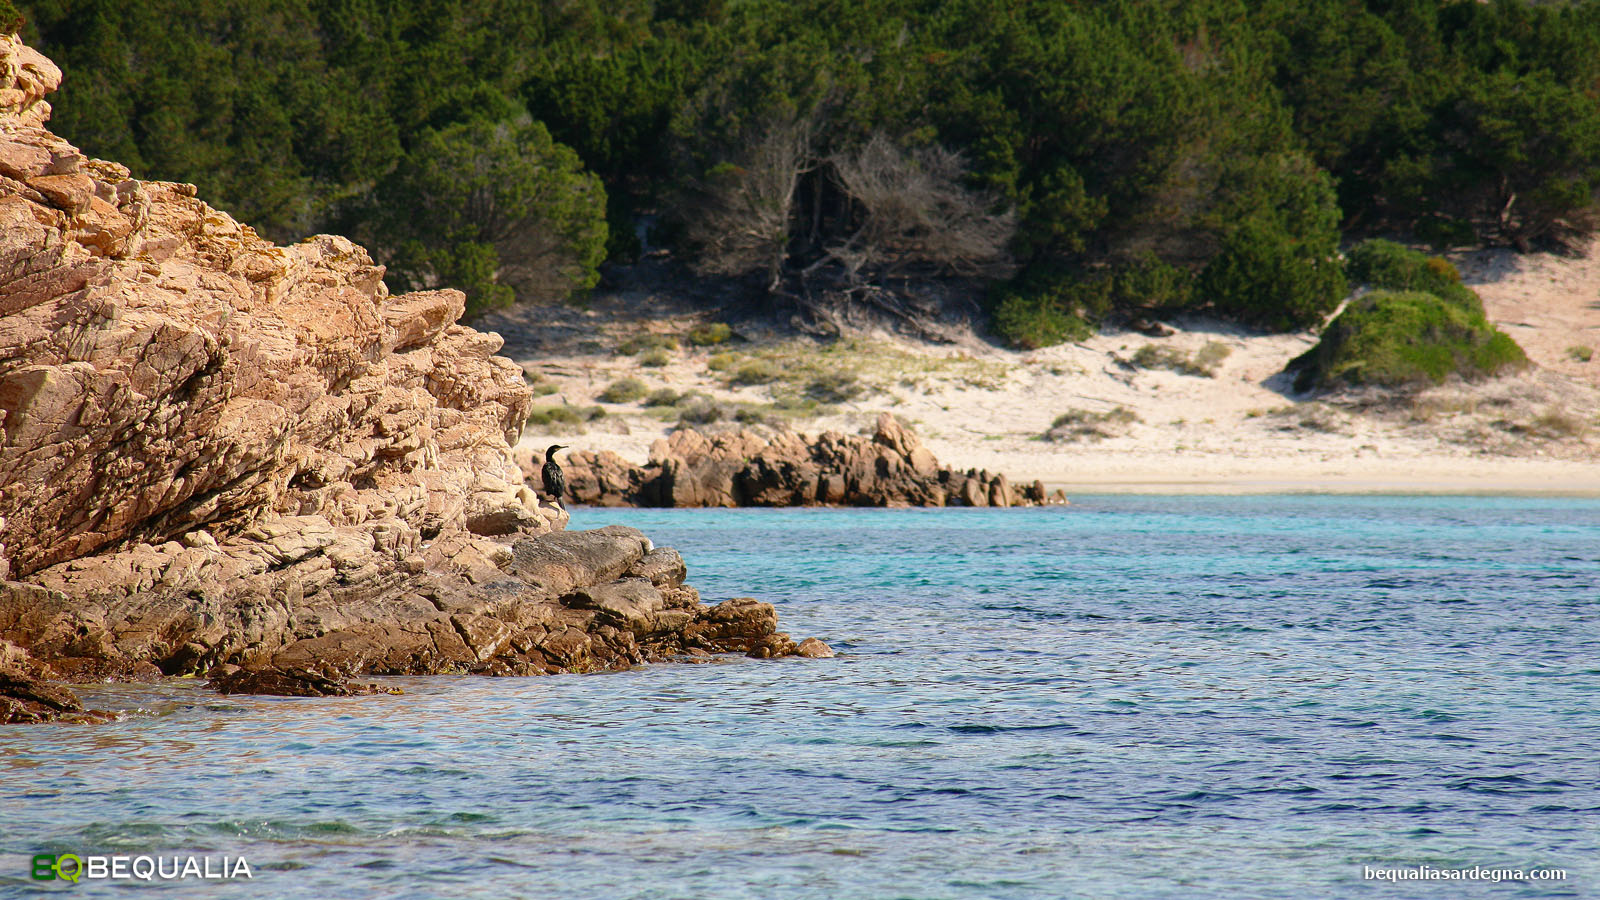 Coromorano in sosta all'isola di Spargi, tra Cala Soraya e Cala Granara